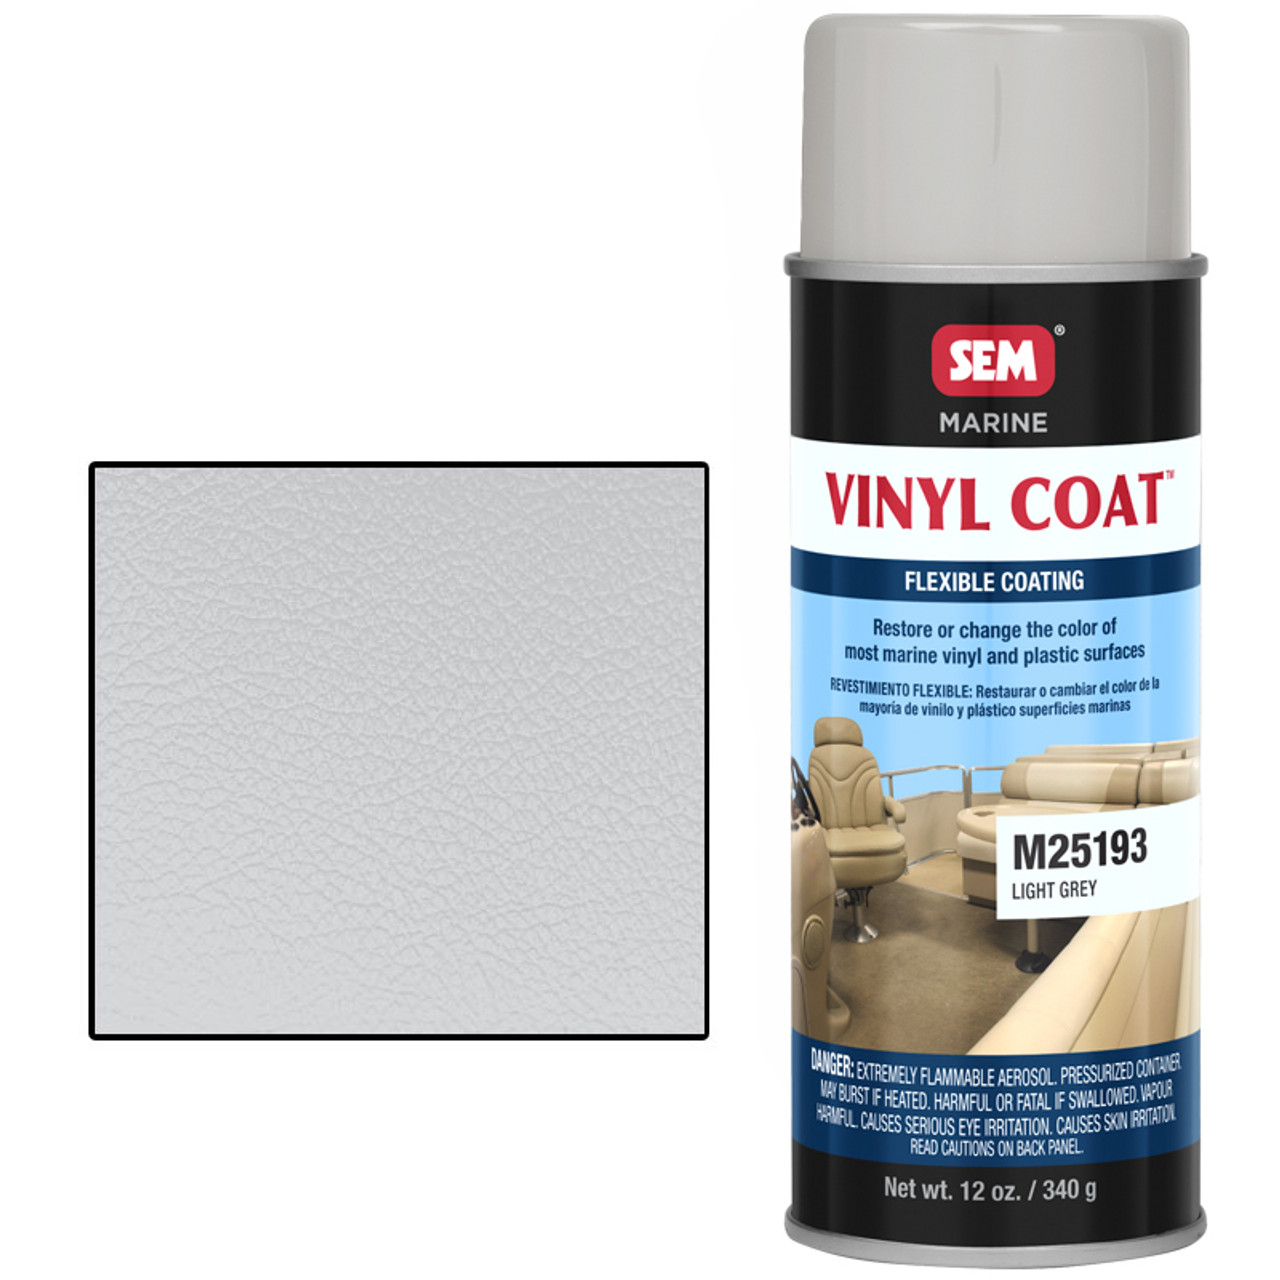 ALL-IN-ONE Paint, Bond-N-Flex Vinyl & Leather Repair Kit